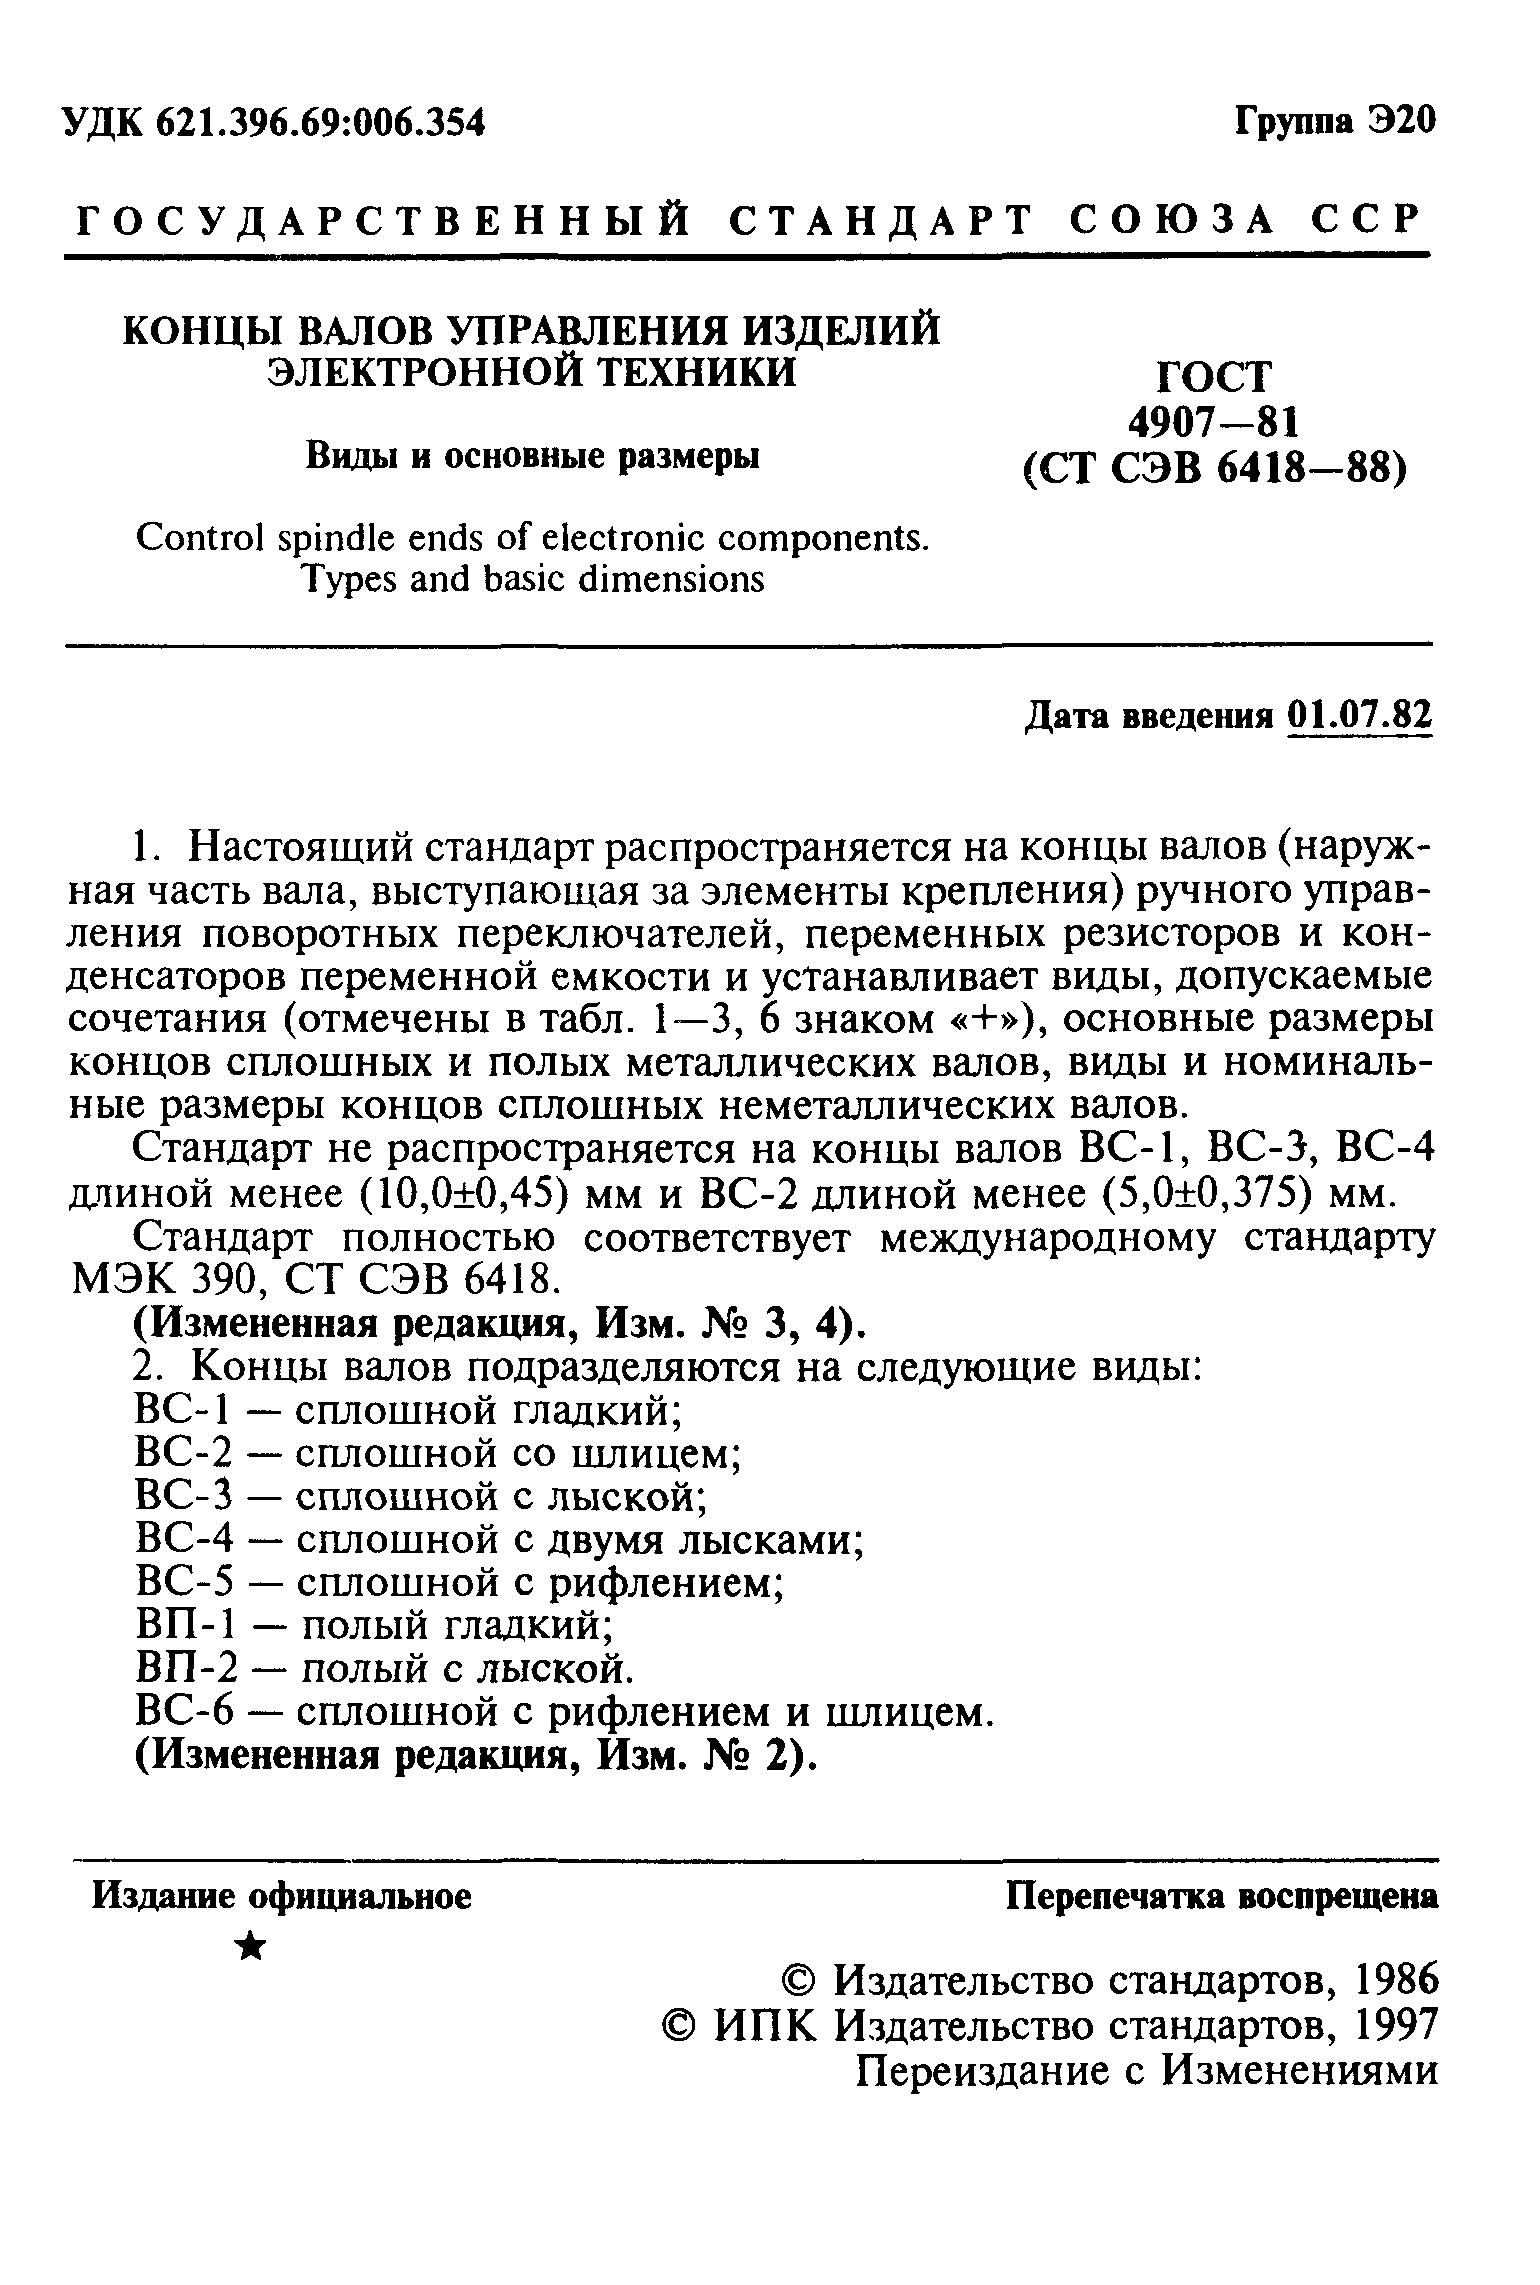 ГОСТ 4907-81